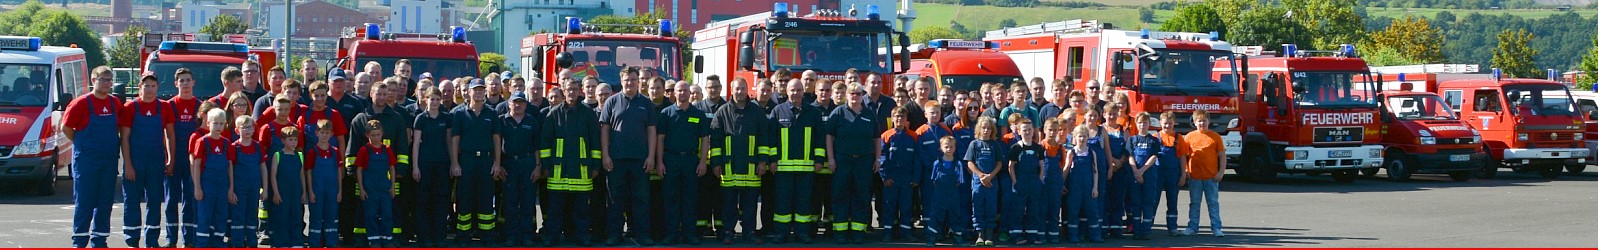 Feuerwehren der Stadt Heringen (Werra)